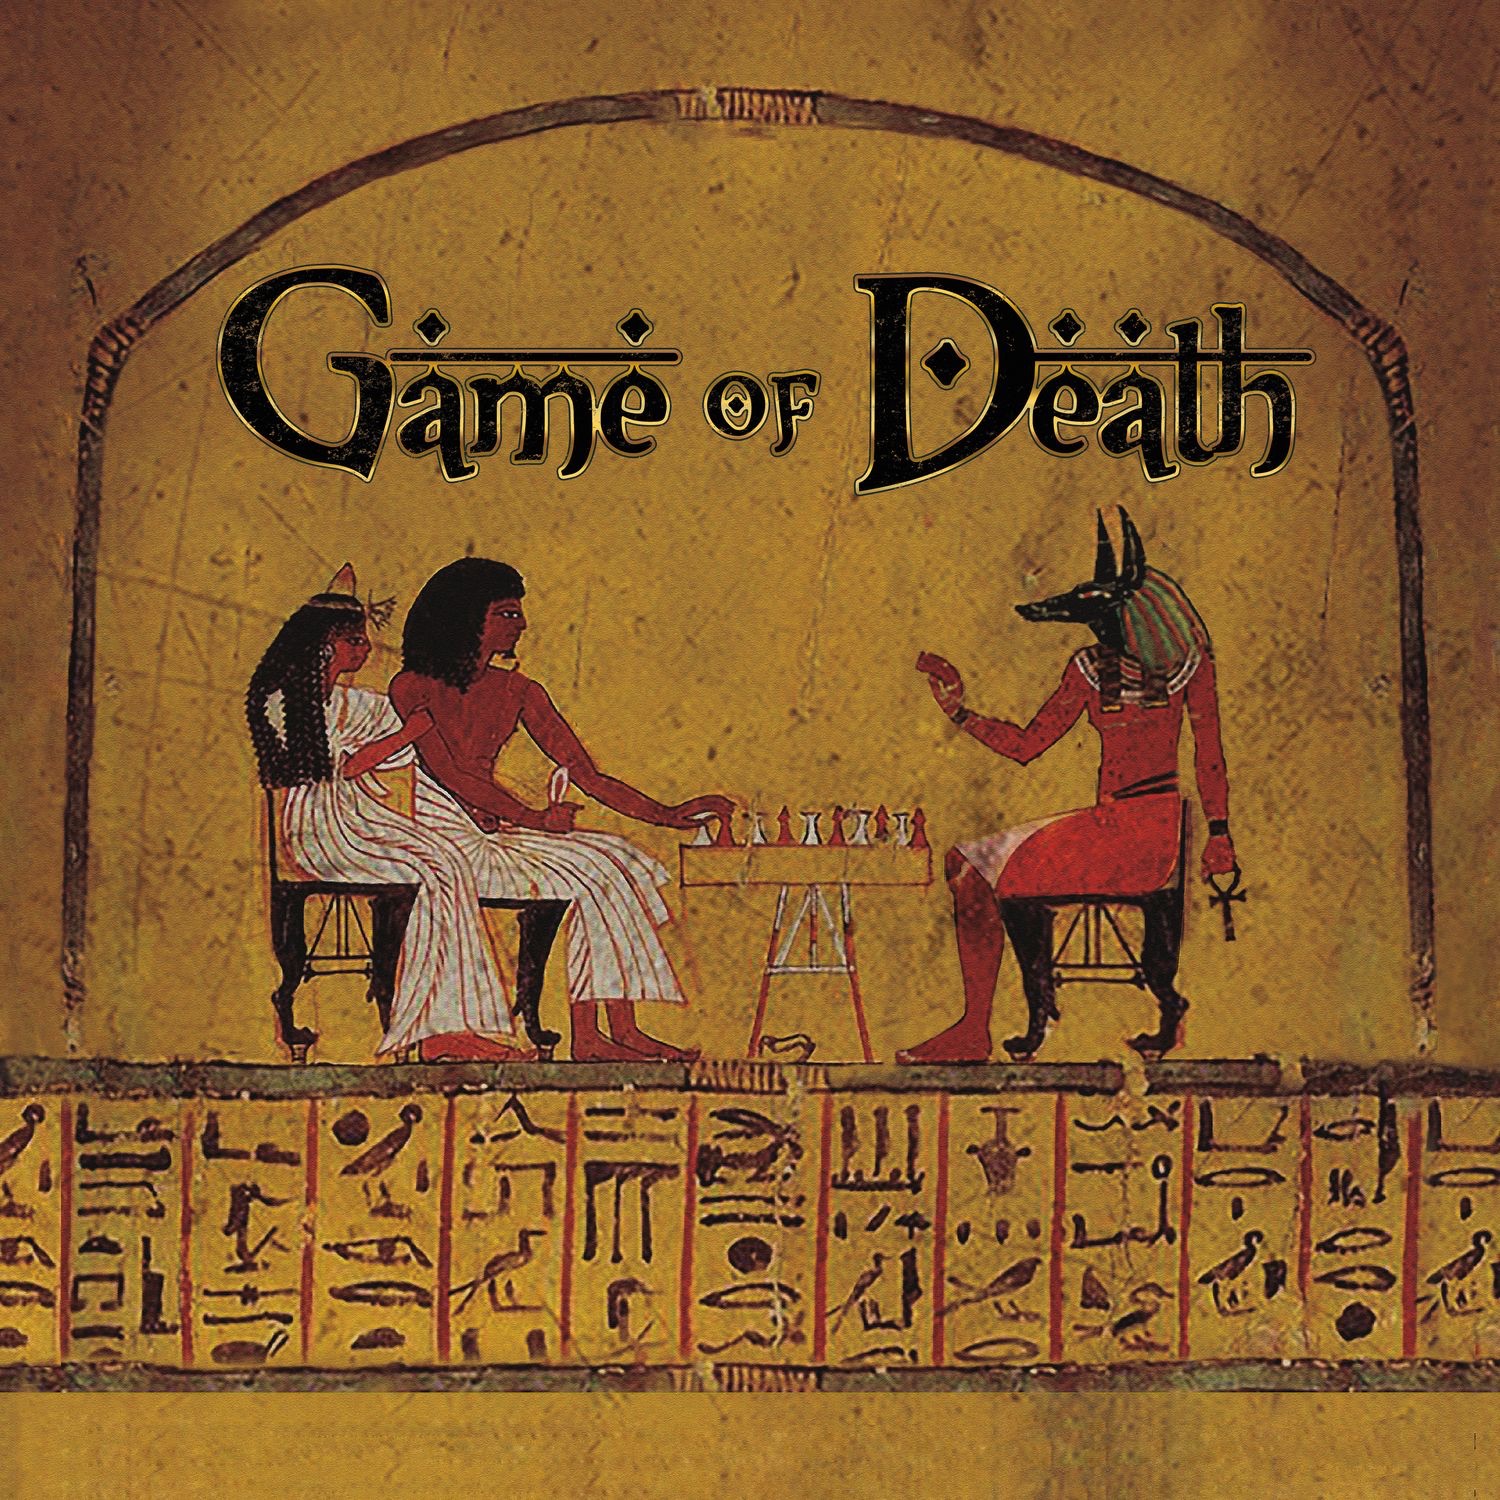 Gensu Dean & Wise Intelligent - G.O.D. (Game of Death)